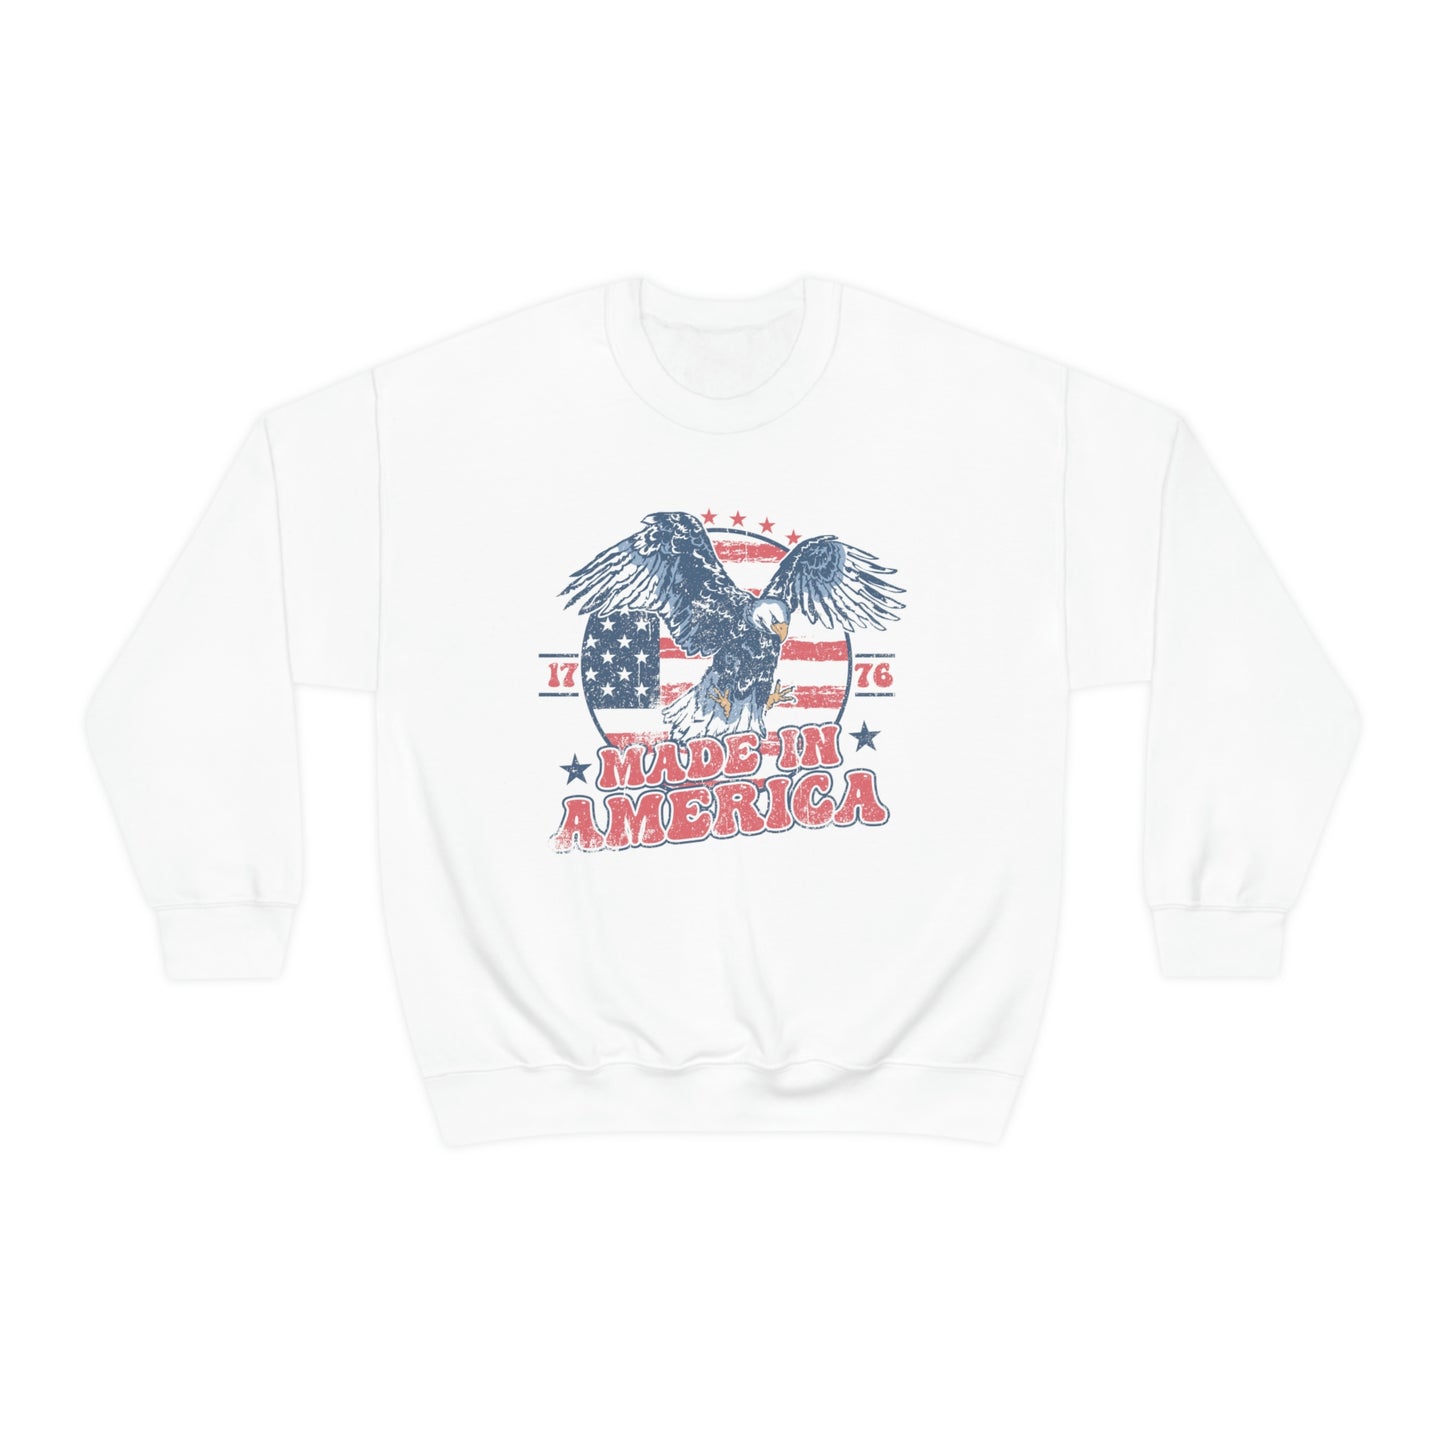 "Made in America" Unisex Crewneck Sweatshirt